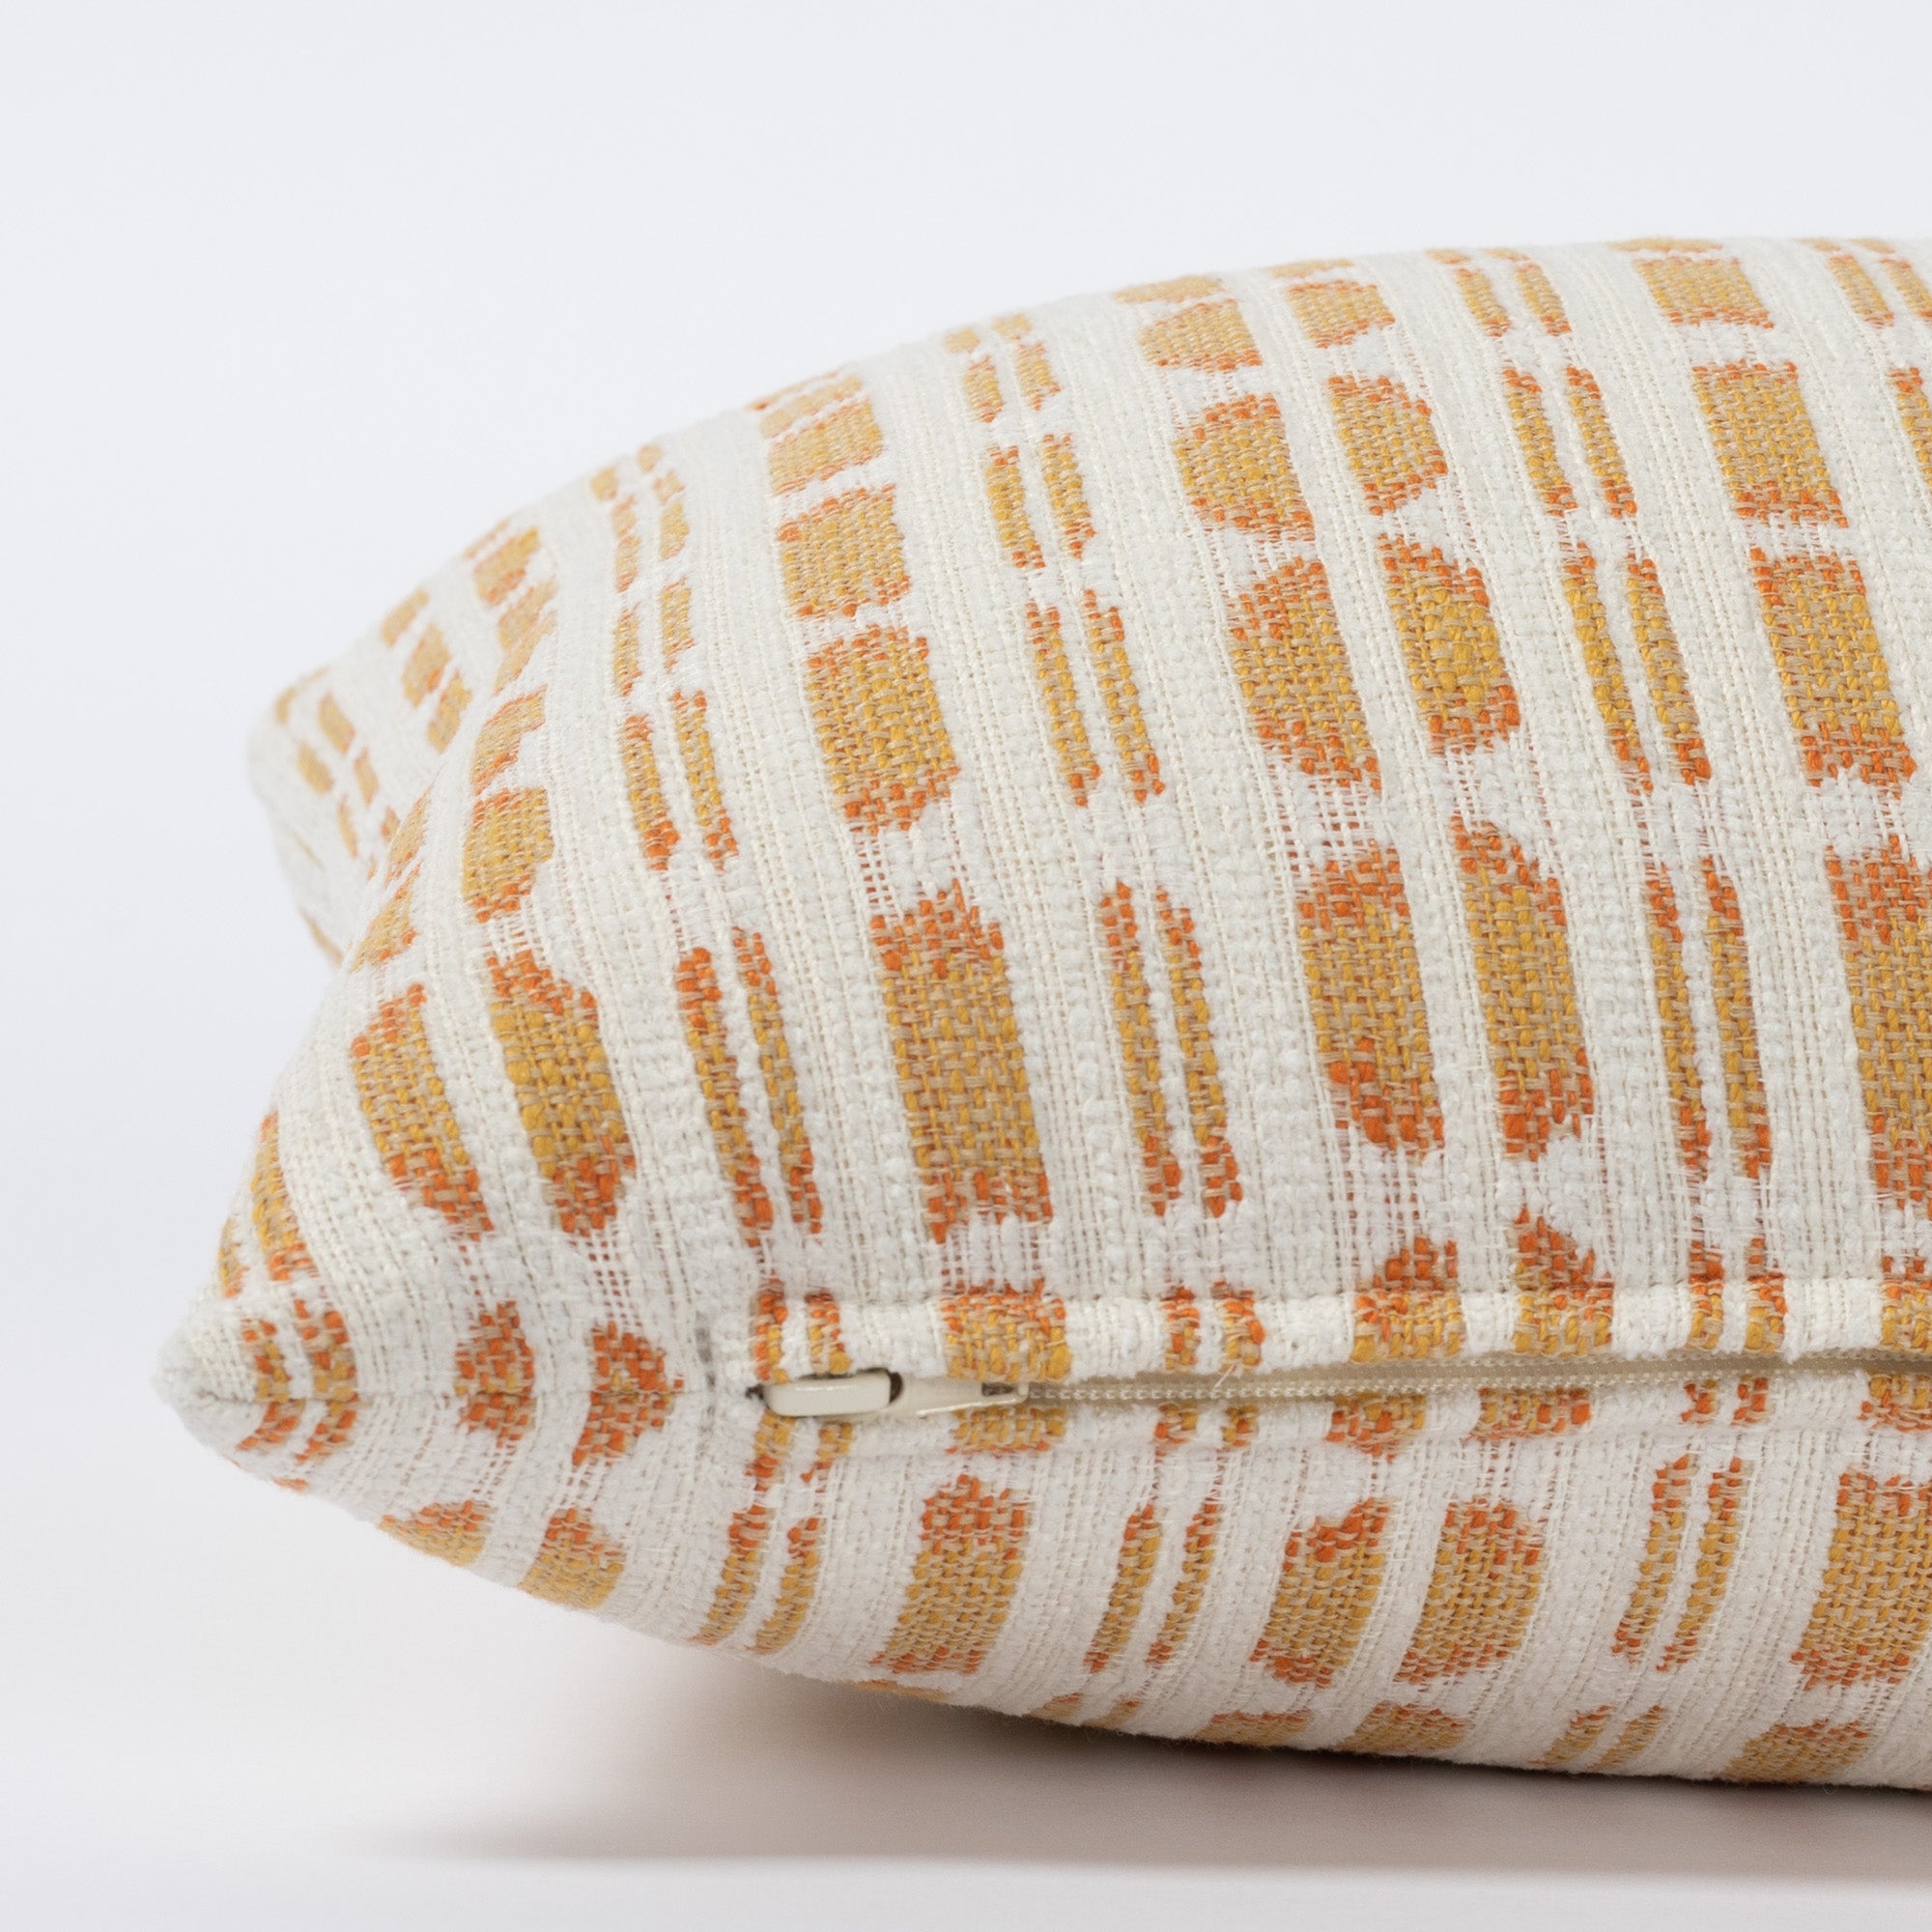 Calima Sunglow yellow, tangerine and white ikat patterned lumbar pillow : view 3